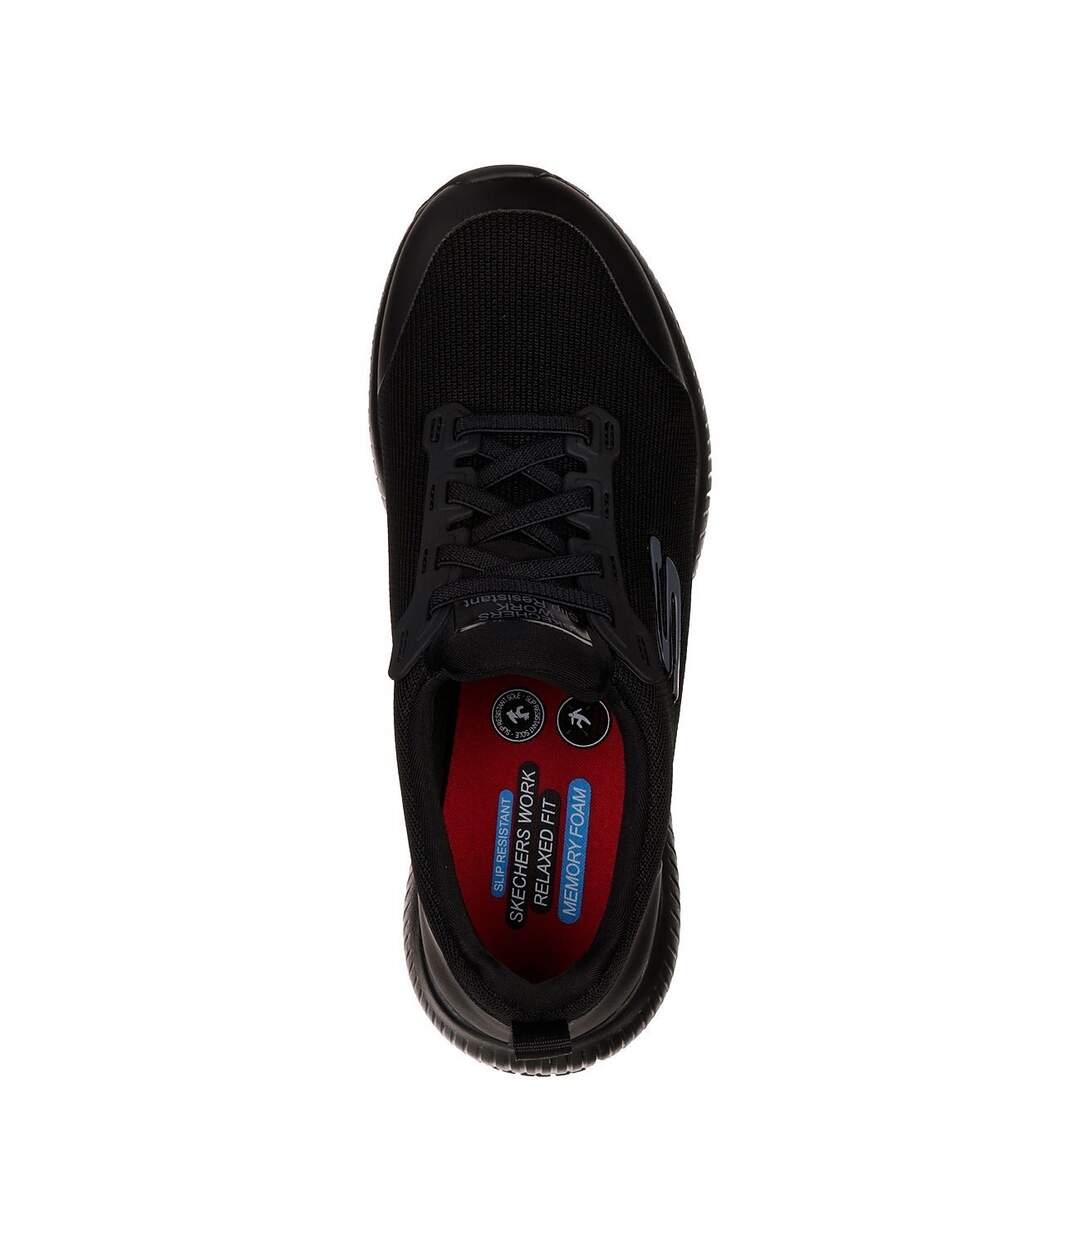 Skechers Womens/Ladies Squad SR Wide Shoes (Black) - UTFS8058